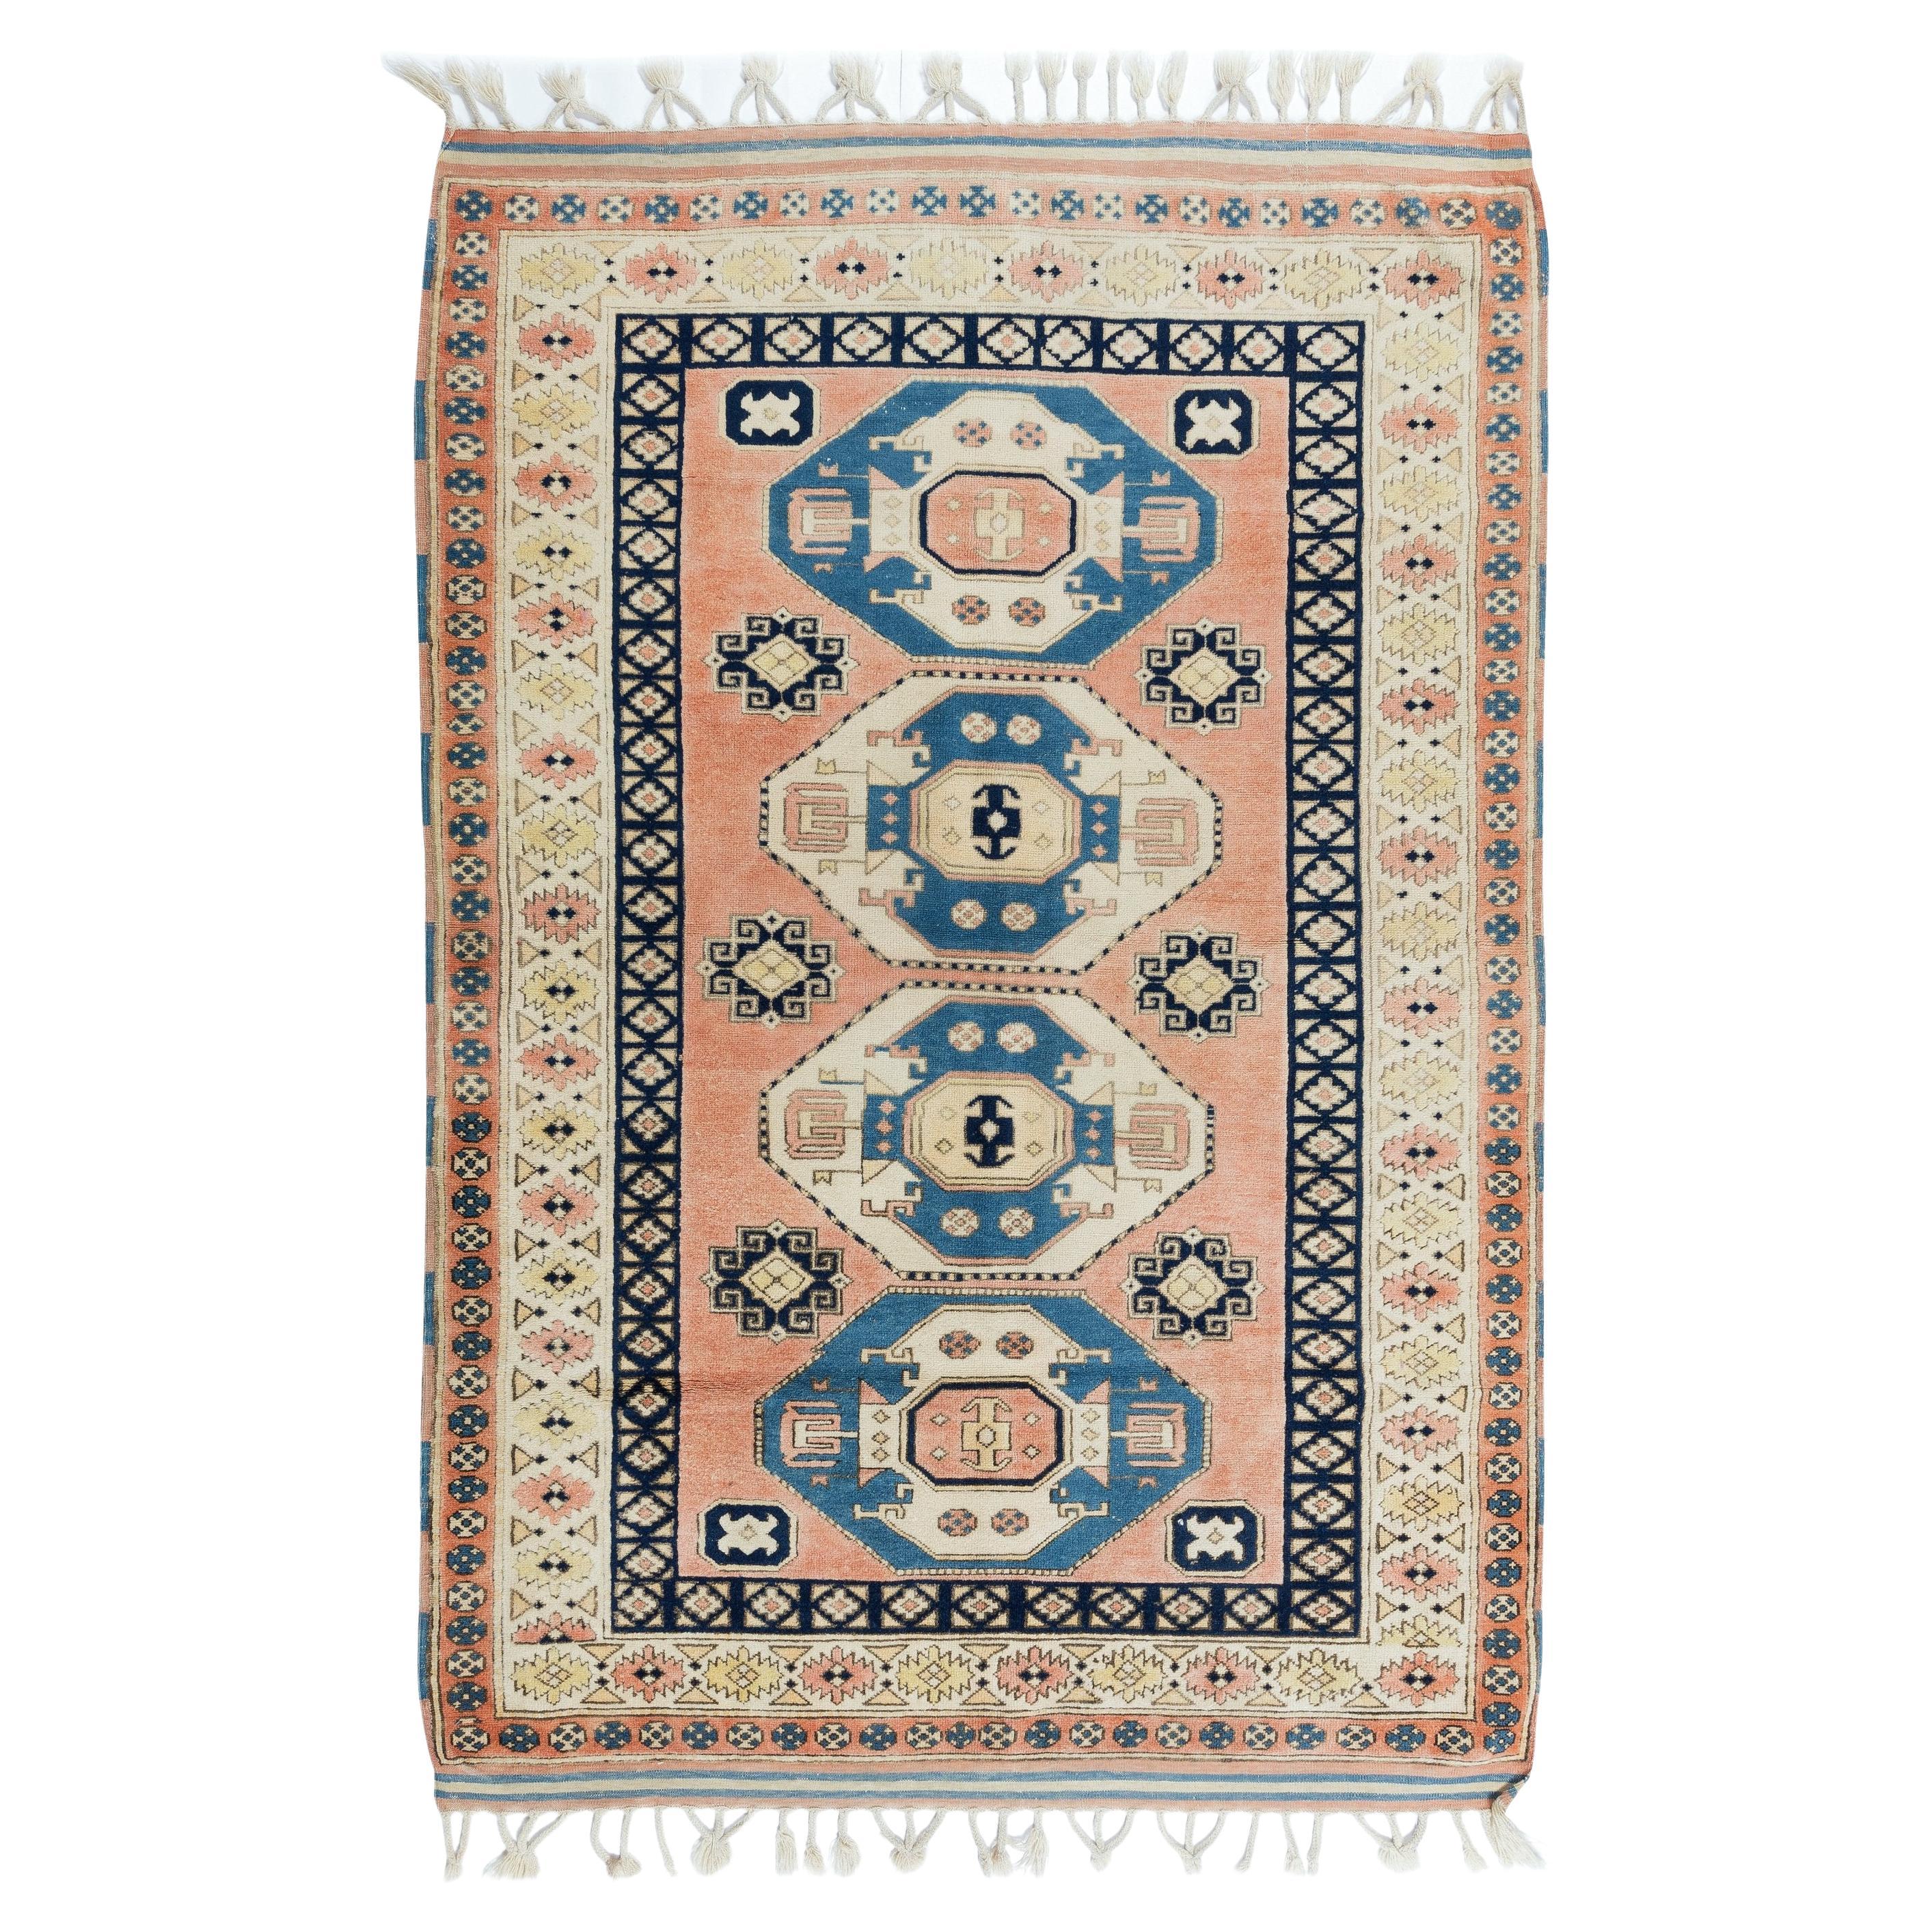 4.2x6 Ft Vintage Handmade Turkish Rug, One-of-a-Kind Geometric Pattern Carpet